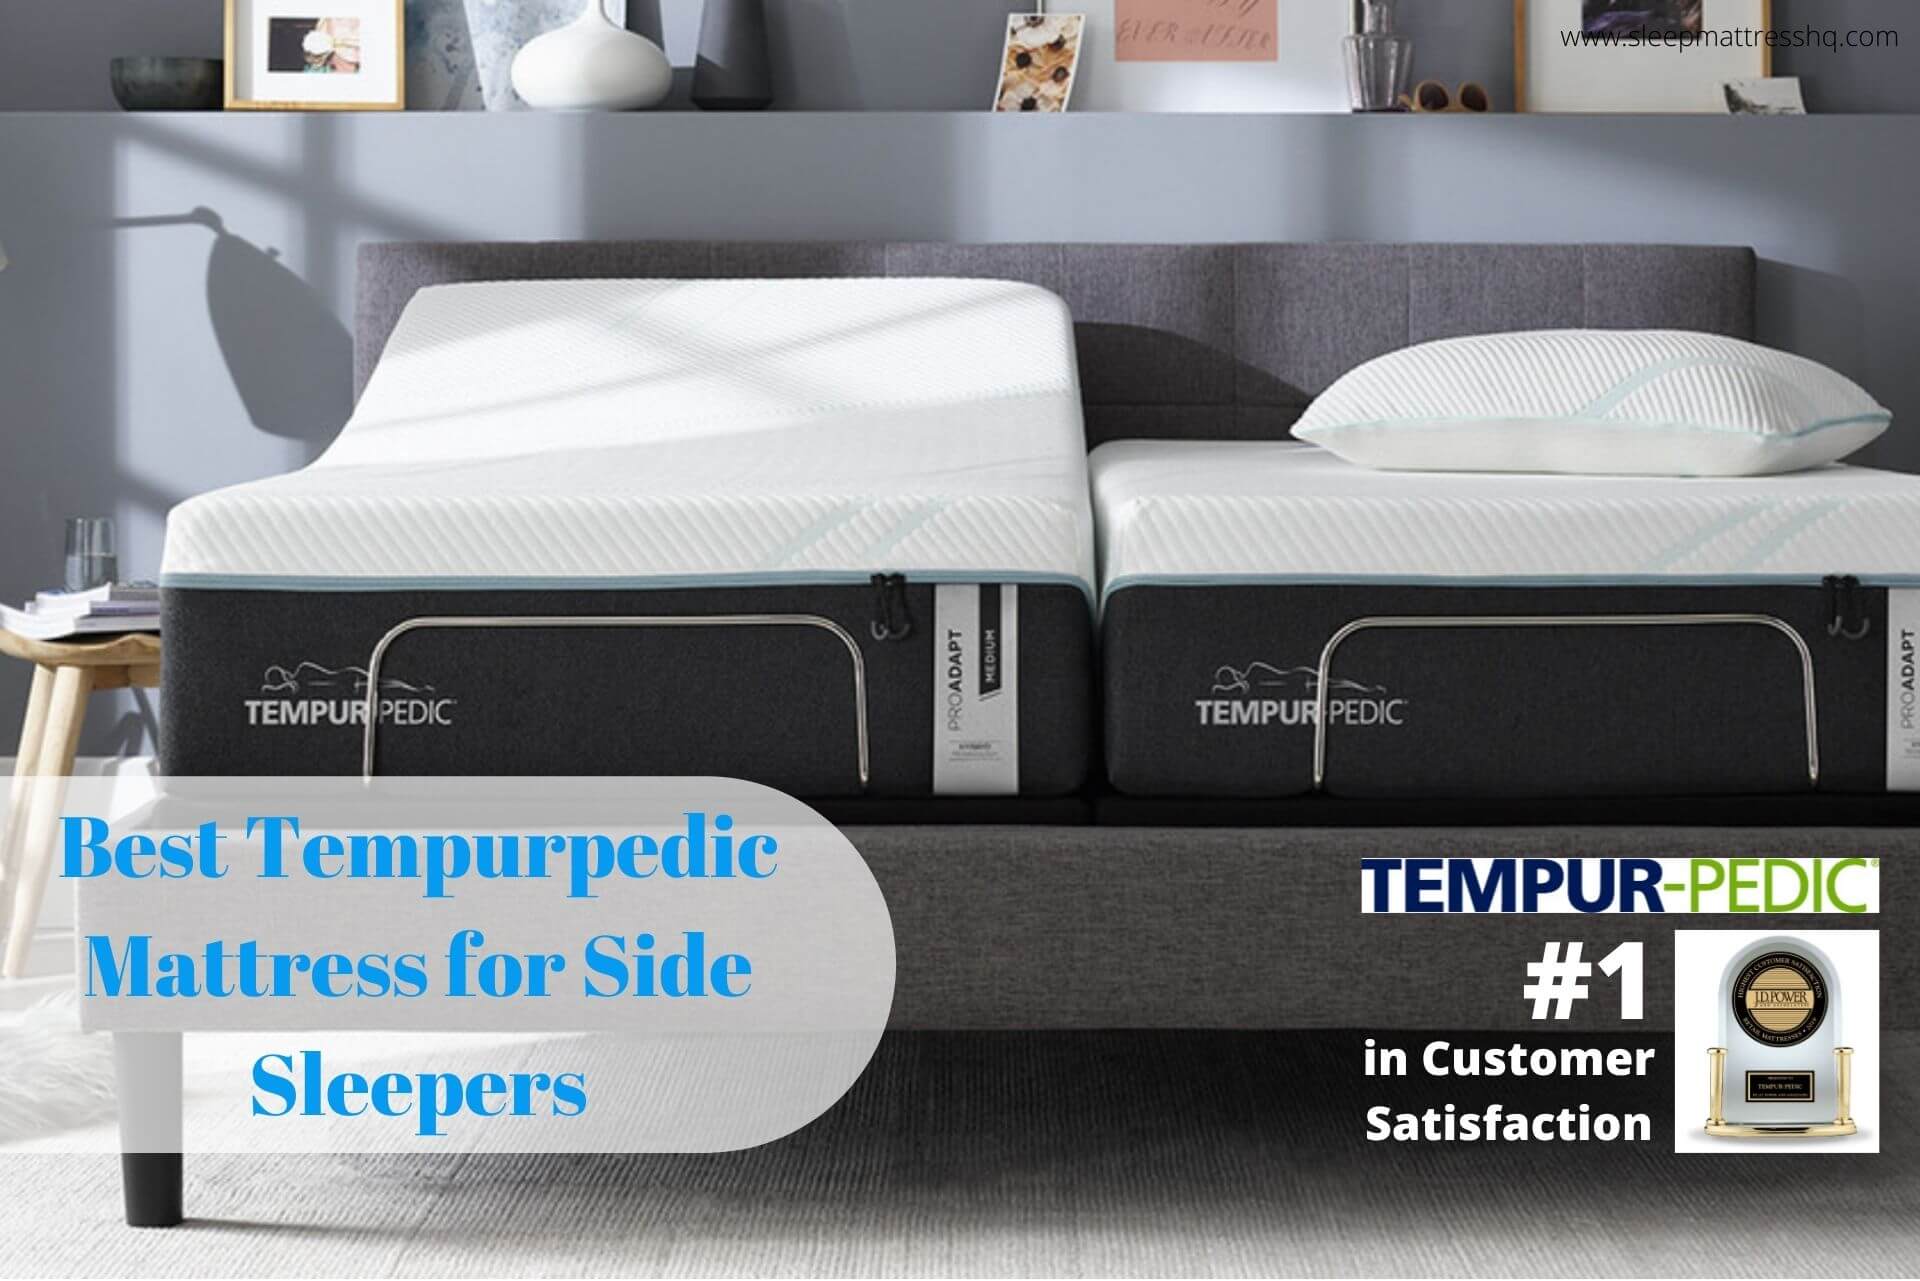 Best Tempurpedic Mattress for Side Sleepers [2021 Research]